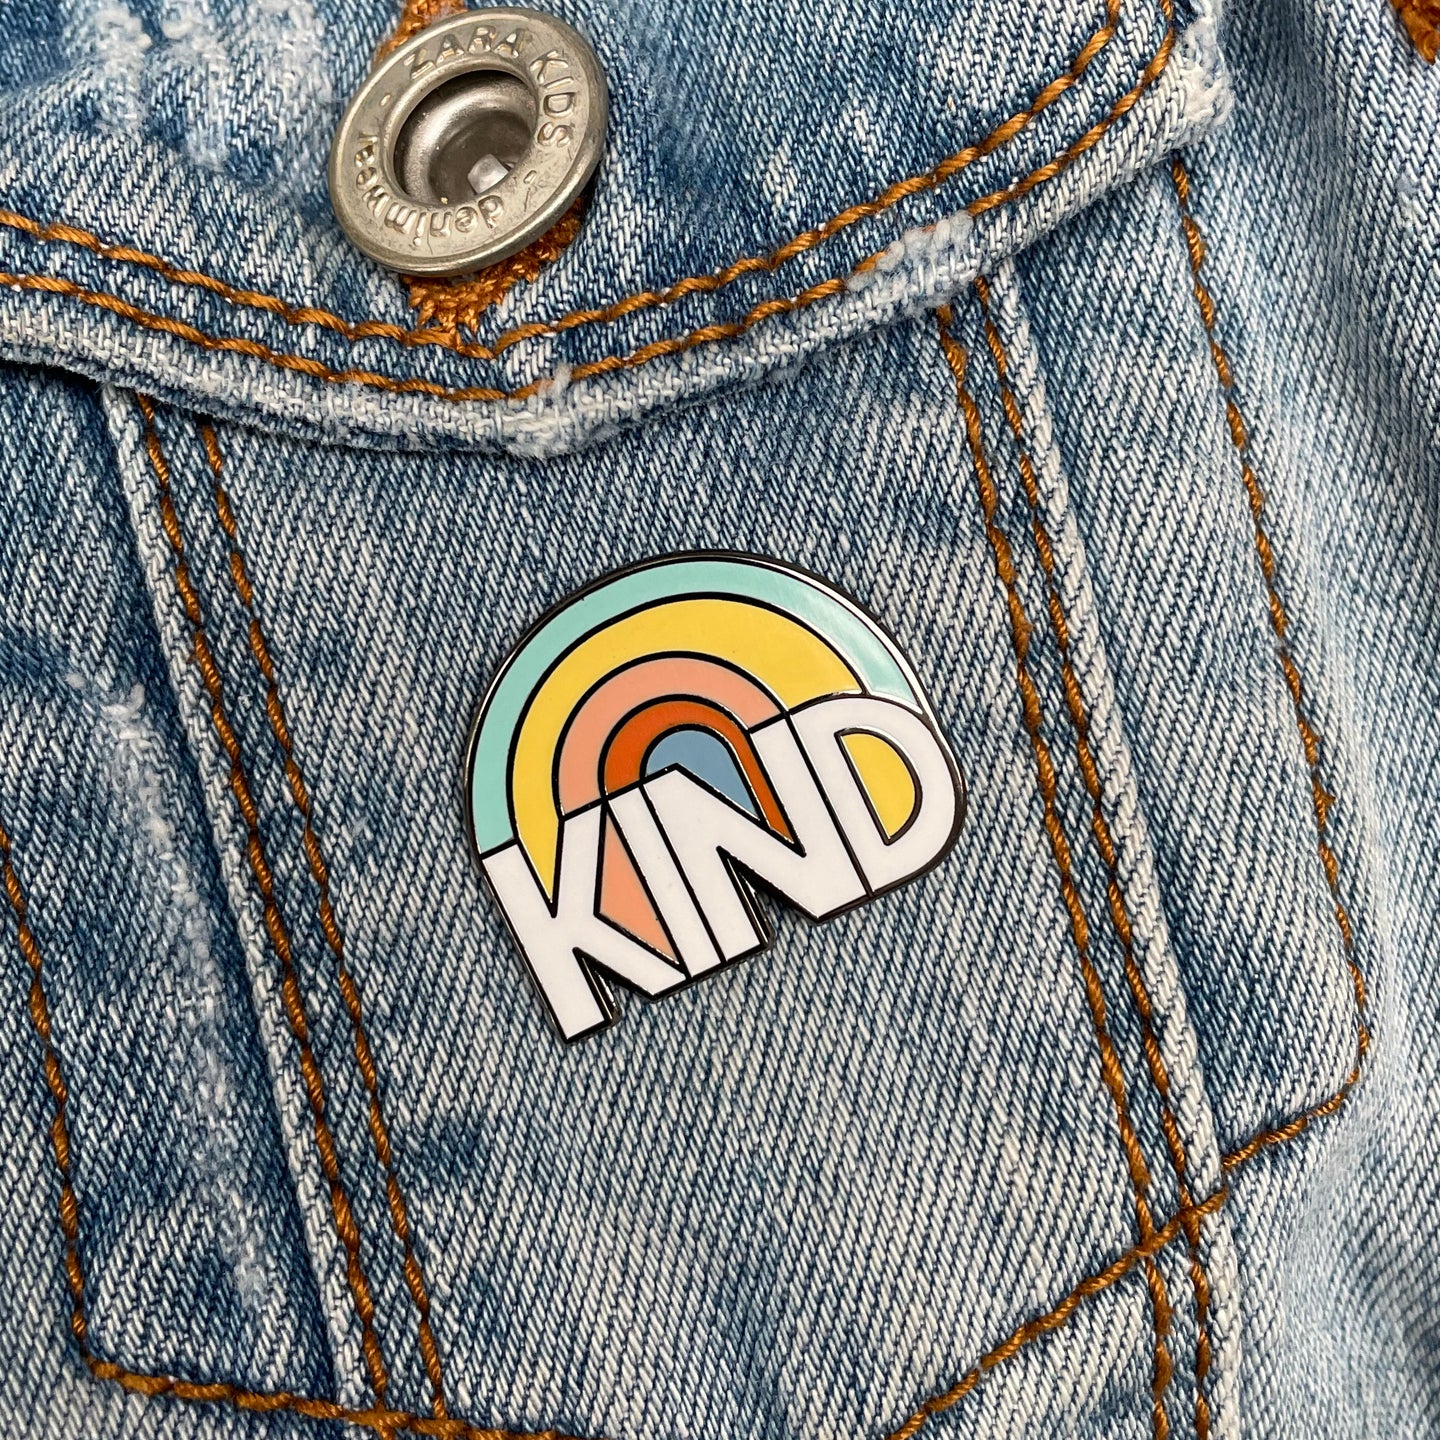 Kind rainbow enamel pin badge